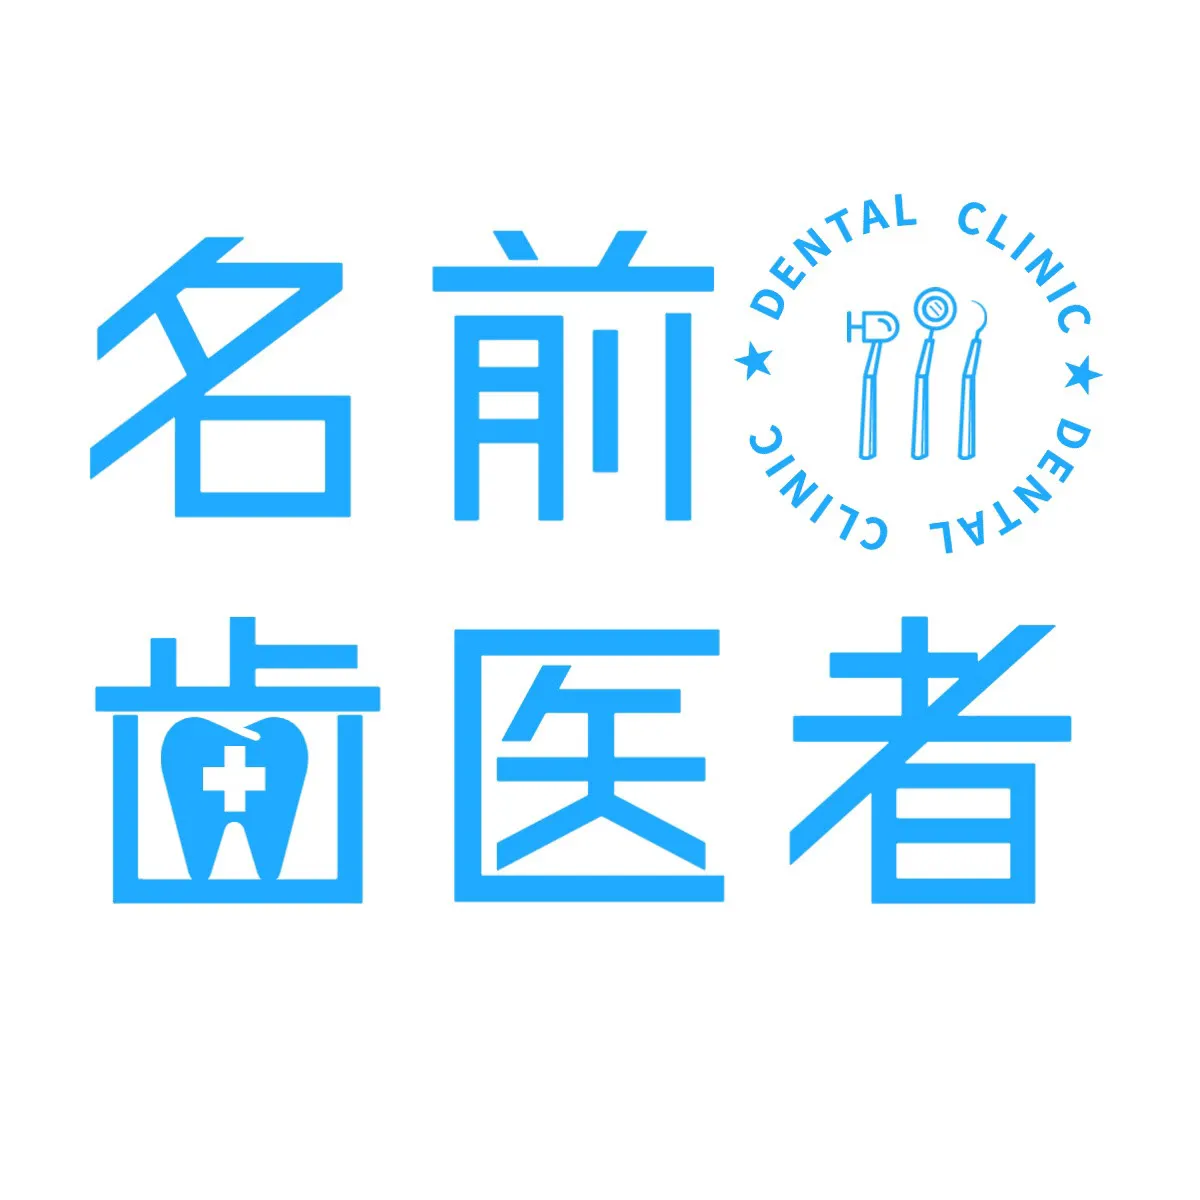 Dental clinic text logo